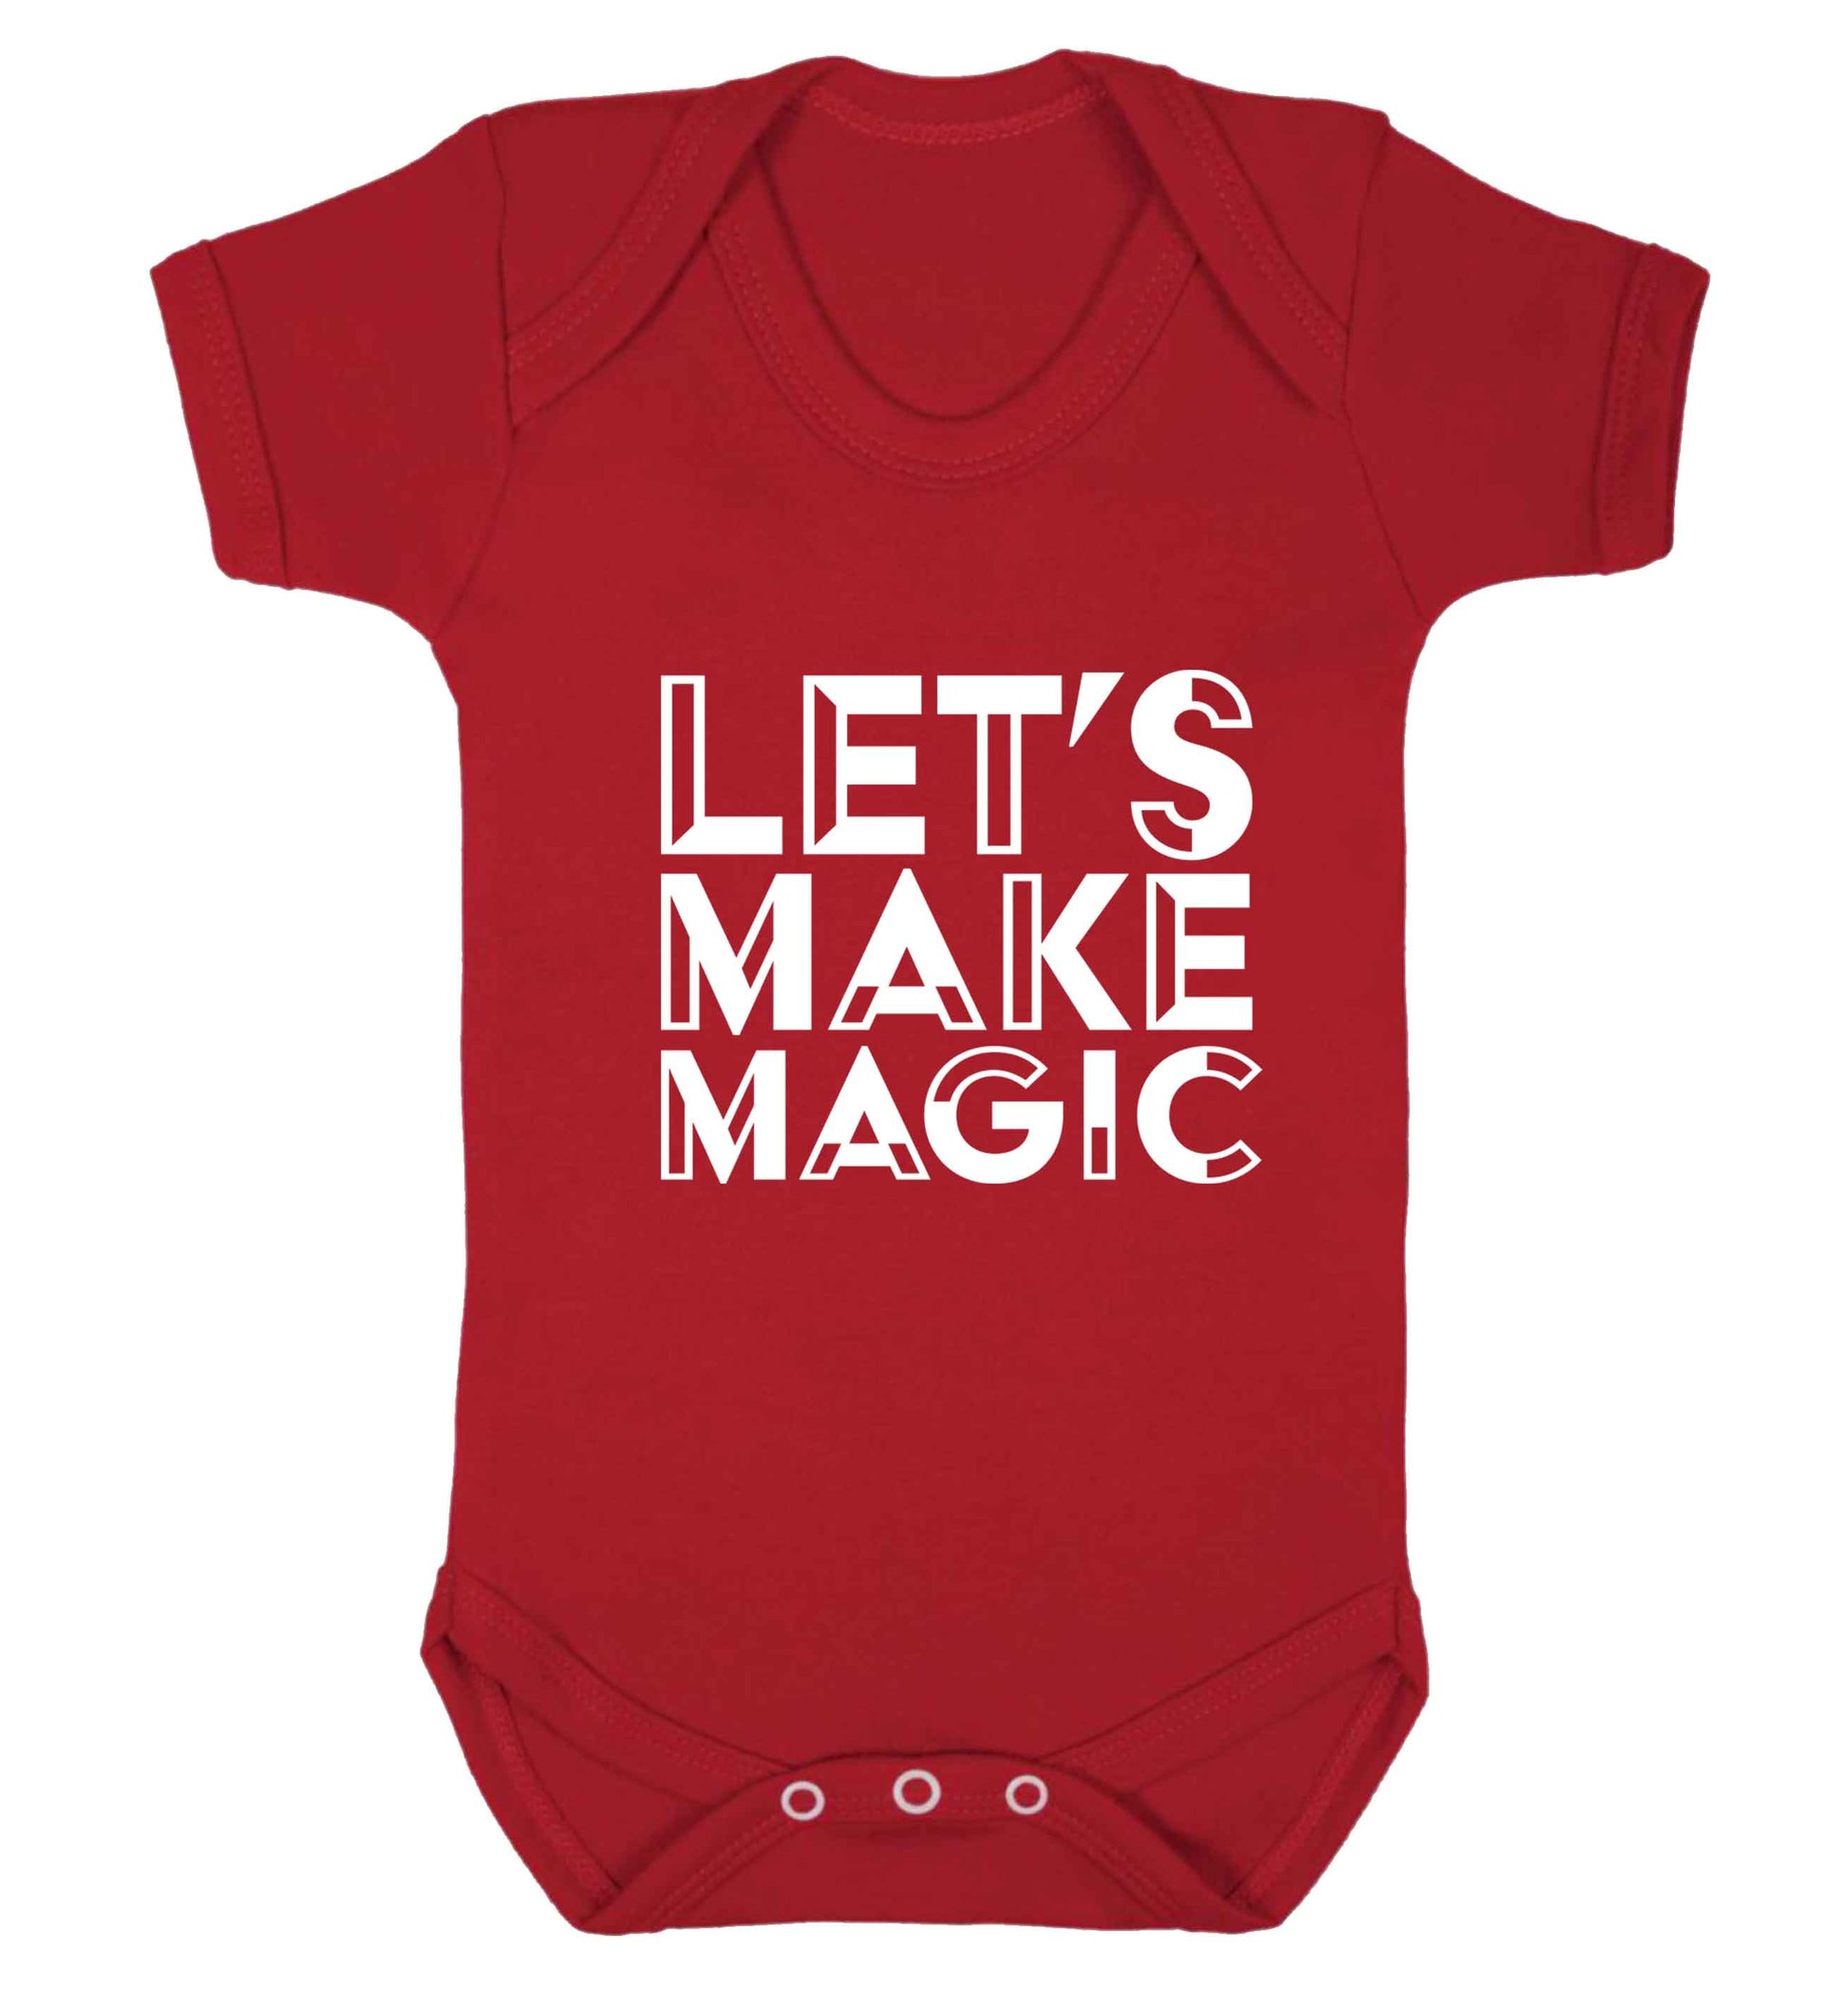 Let's make magic baby vest red 18-24 months